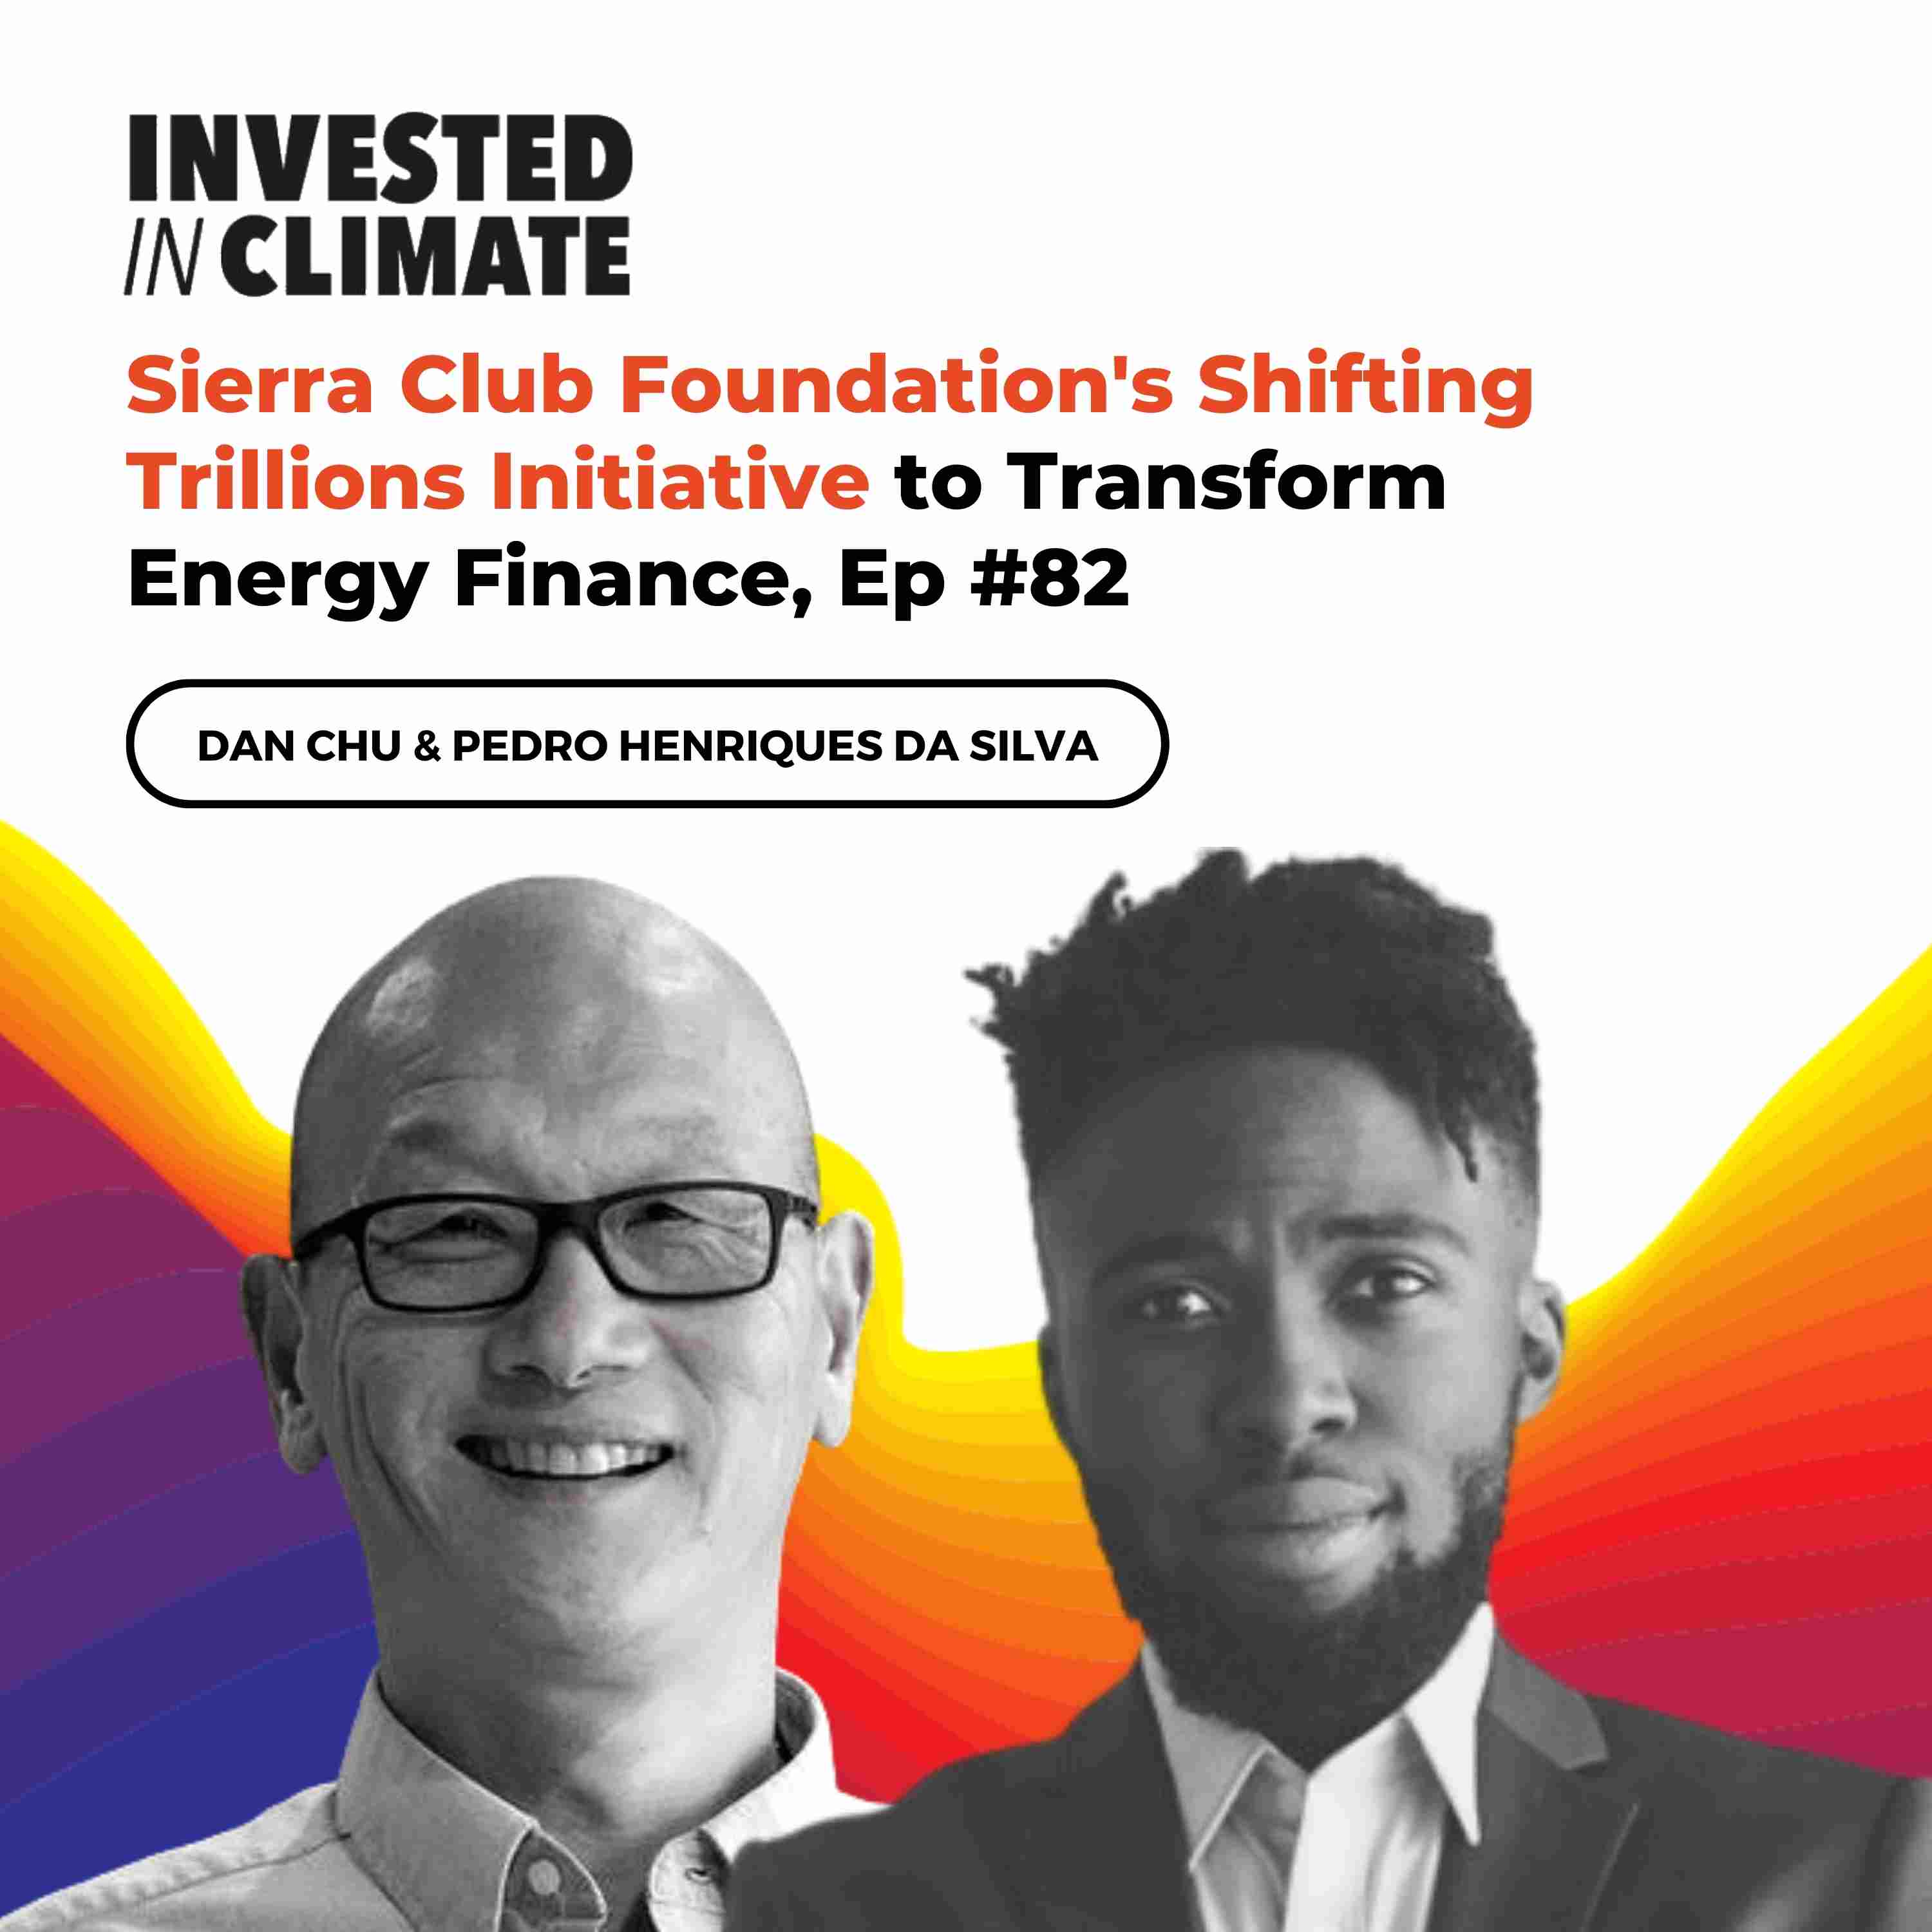 Sierra Club Foundation's Shifting Trillions Initiative to Transform Energy Finance, Ep #82